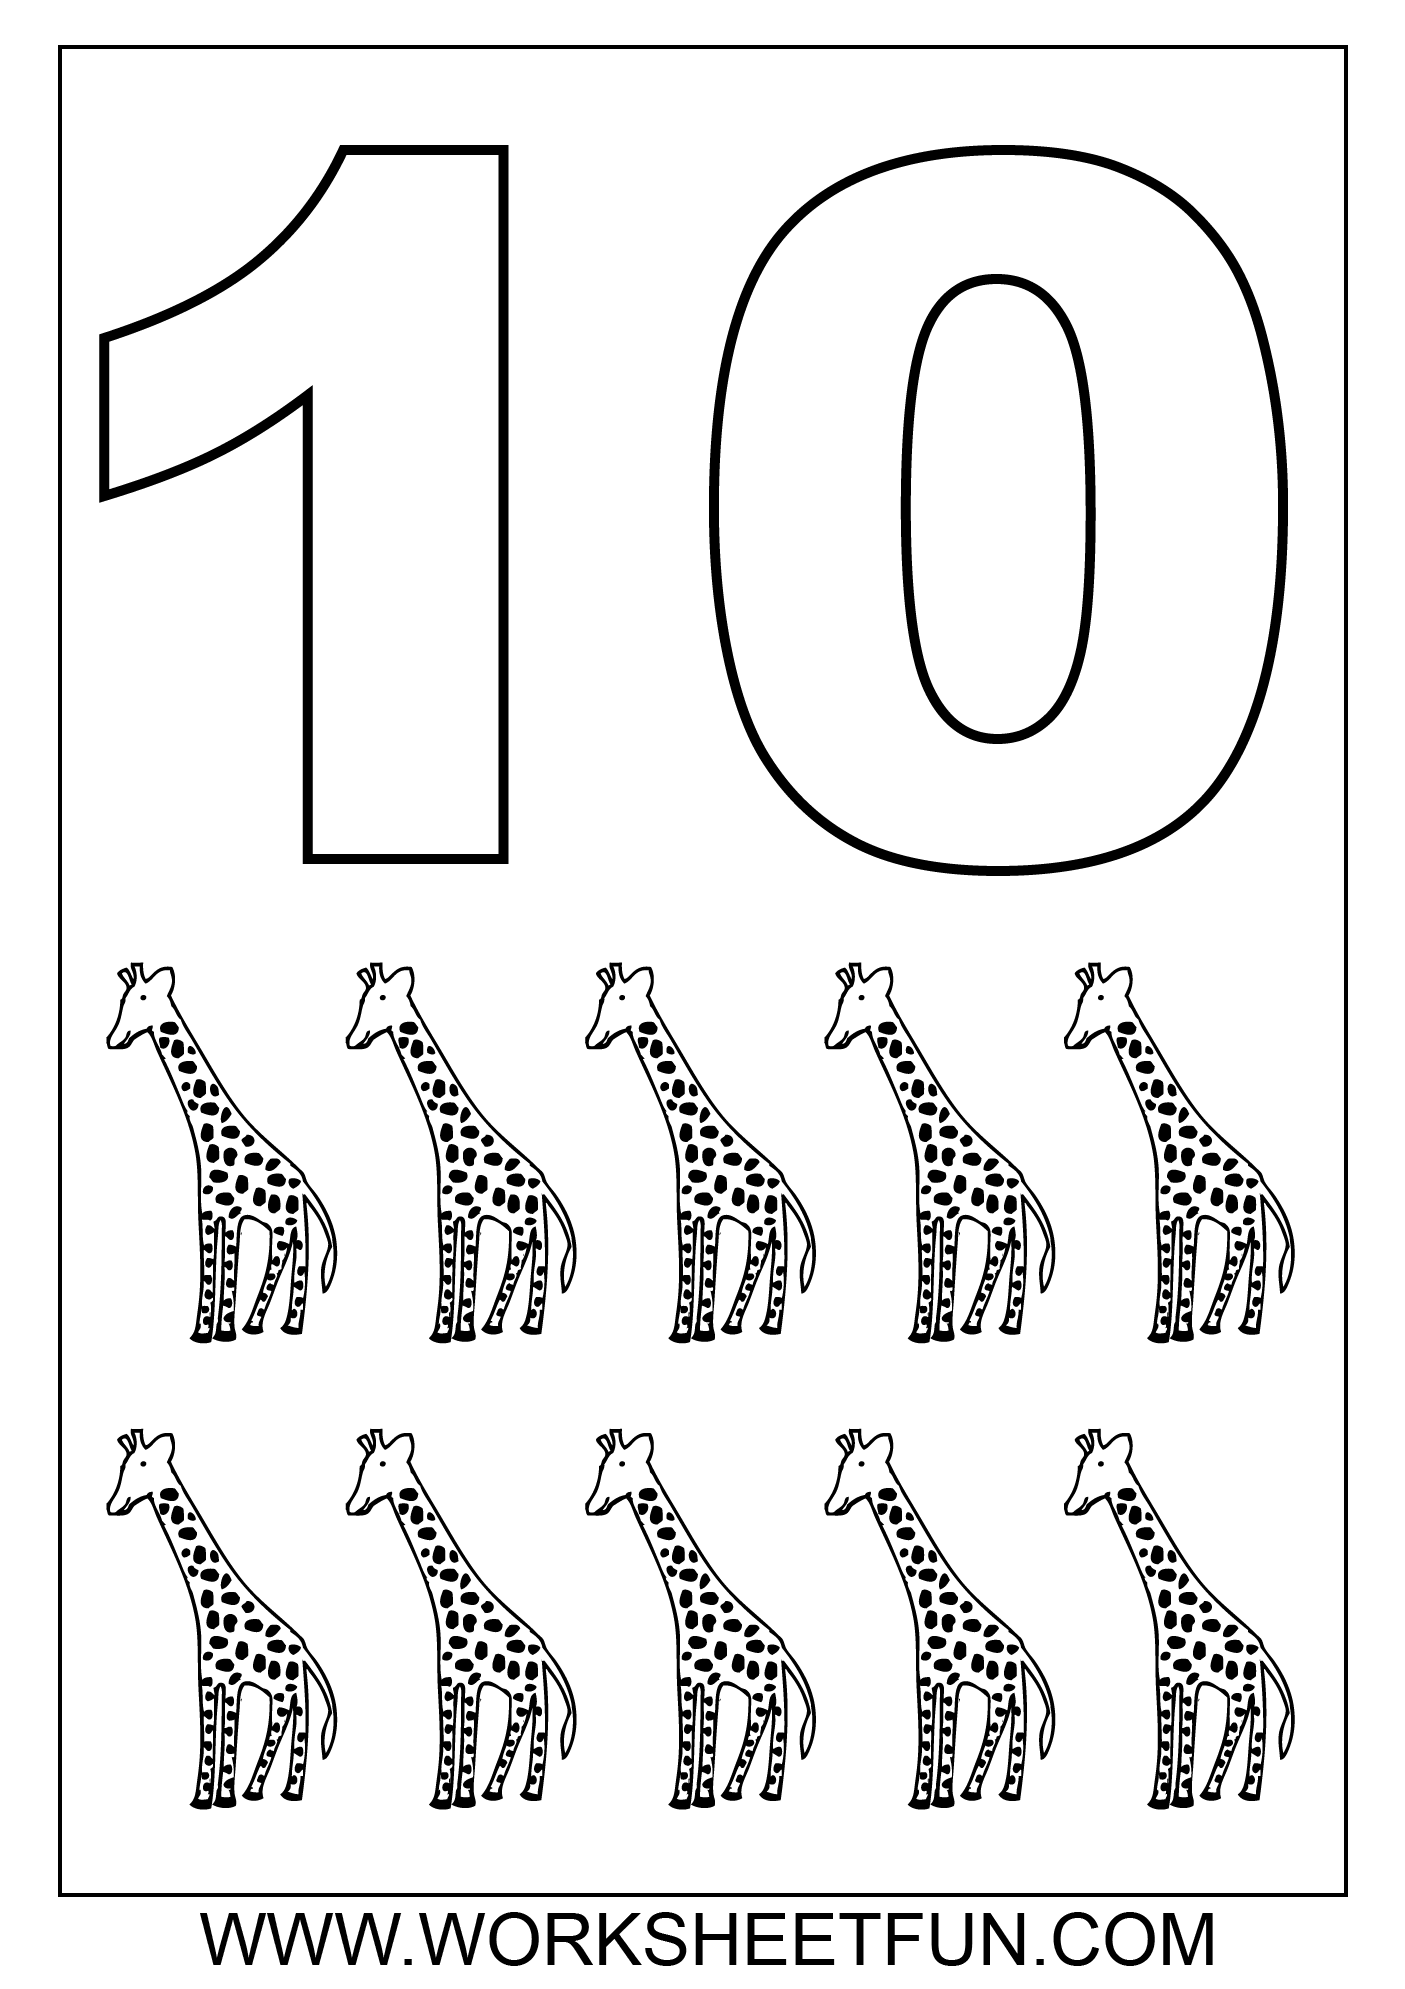 16 Best Images of Numbers 1 50 Worksheets   Kindergarten Number ...